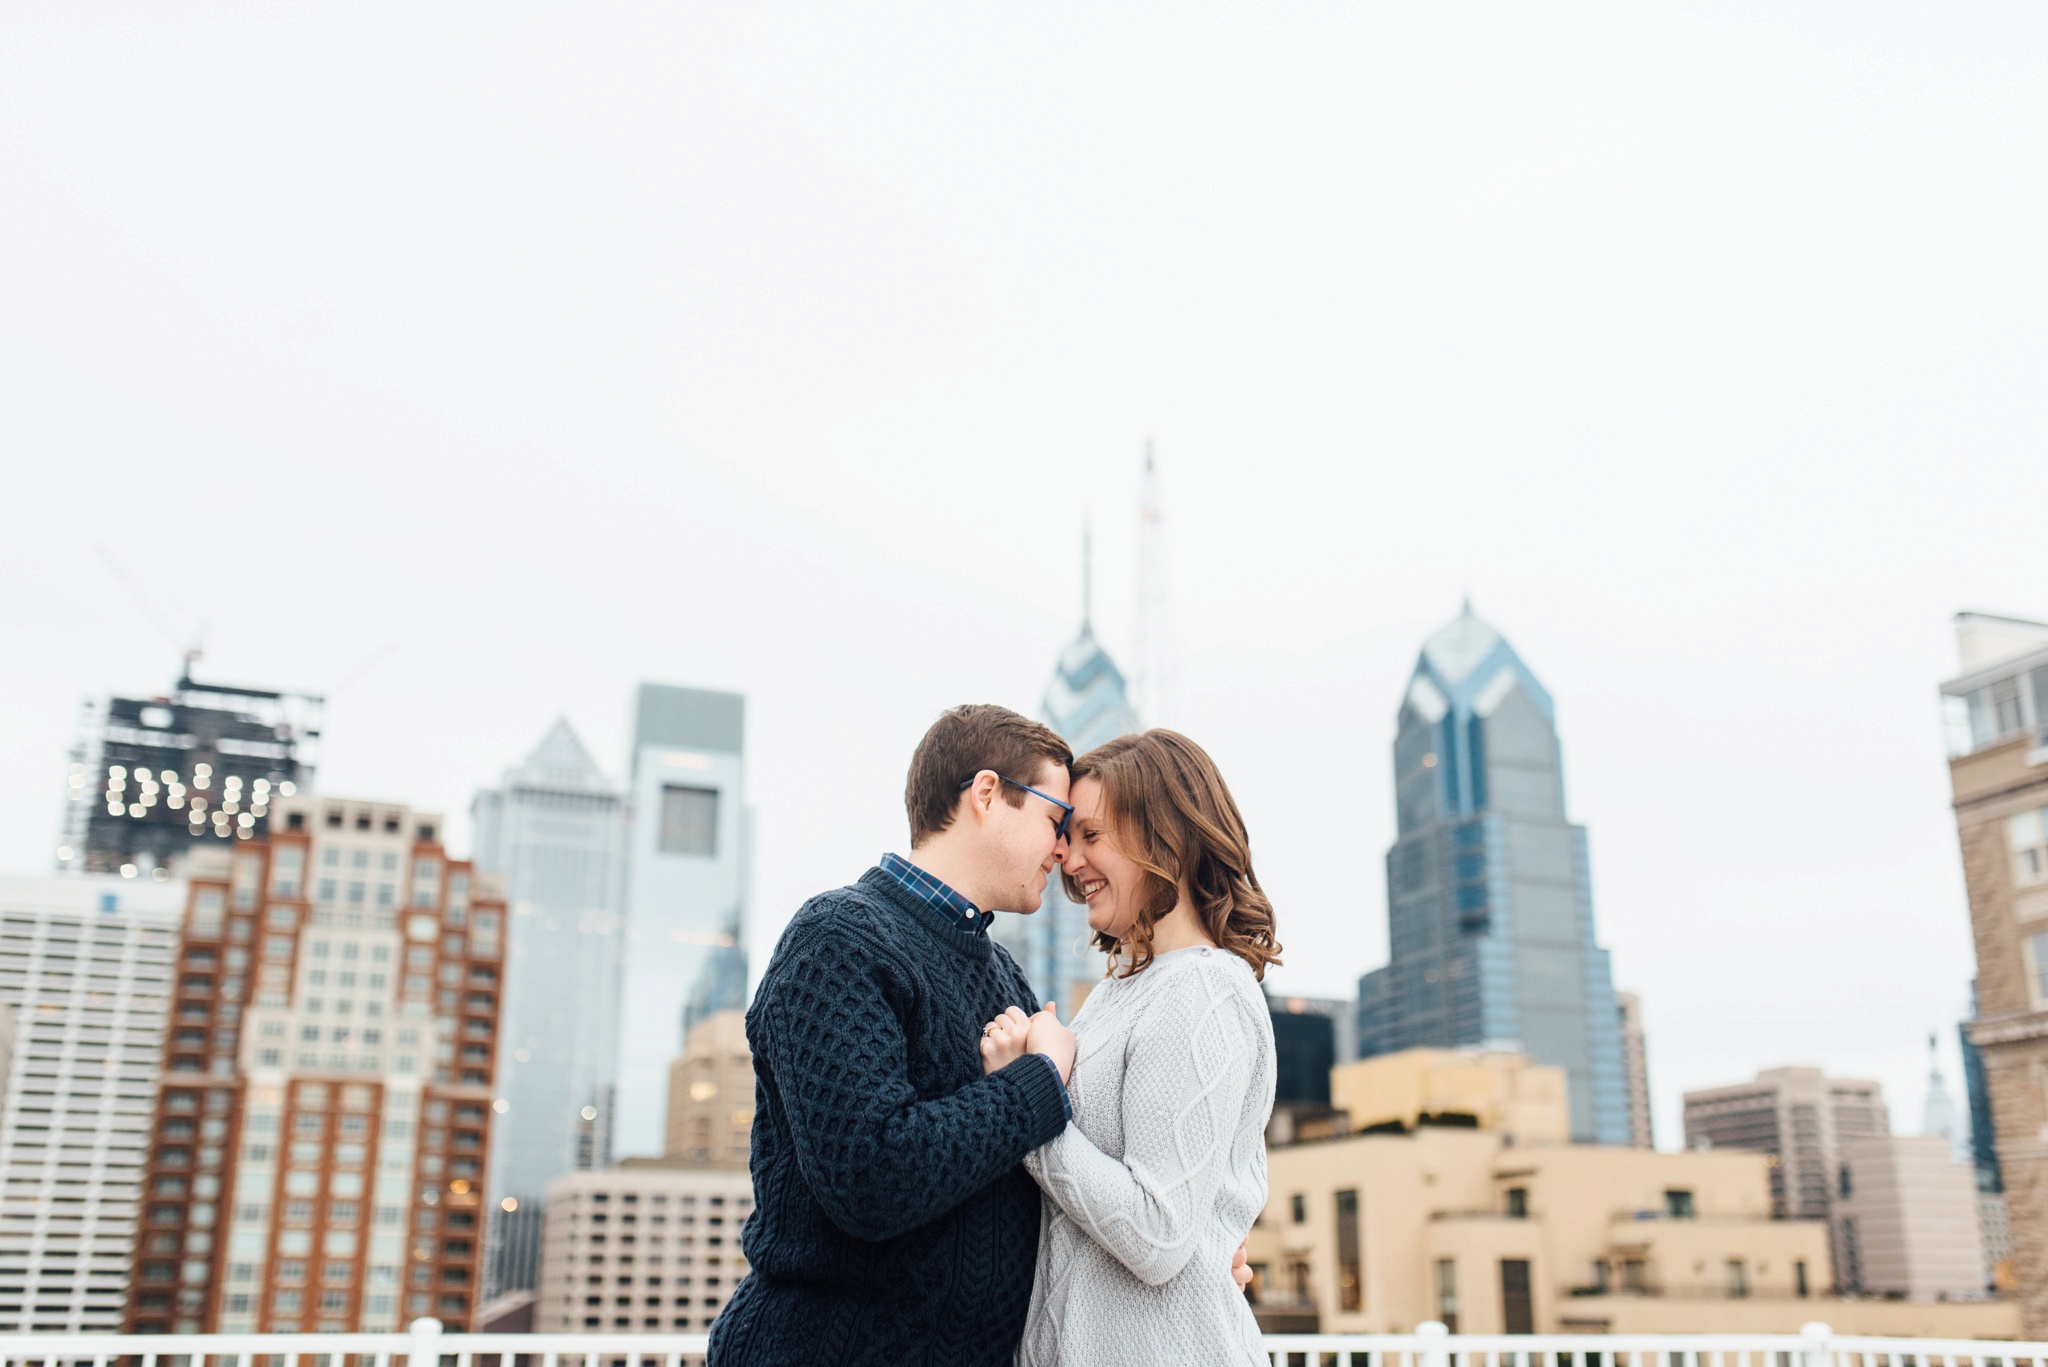 Carolynn + Ryan - Rittenhouse Square Engagement Session - Philadelphia Wedding Photographer - Alison Dunn Photography photo